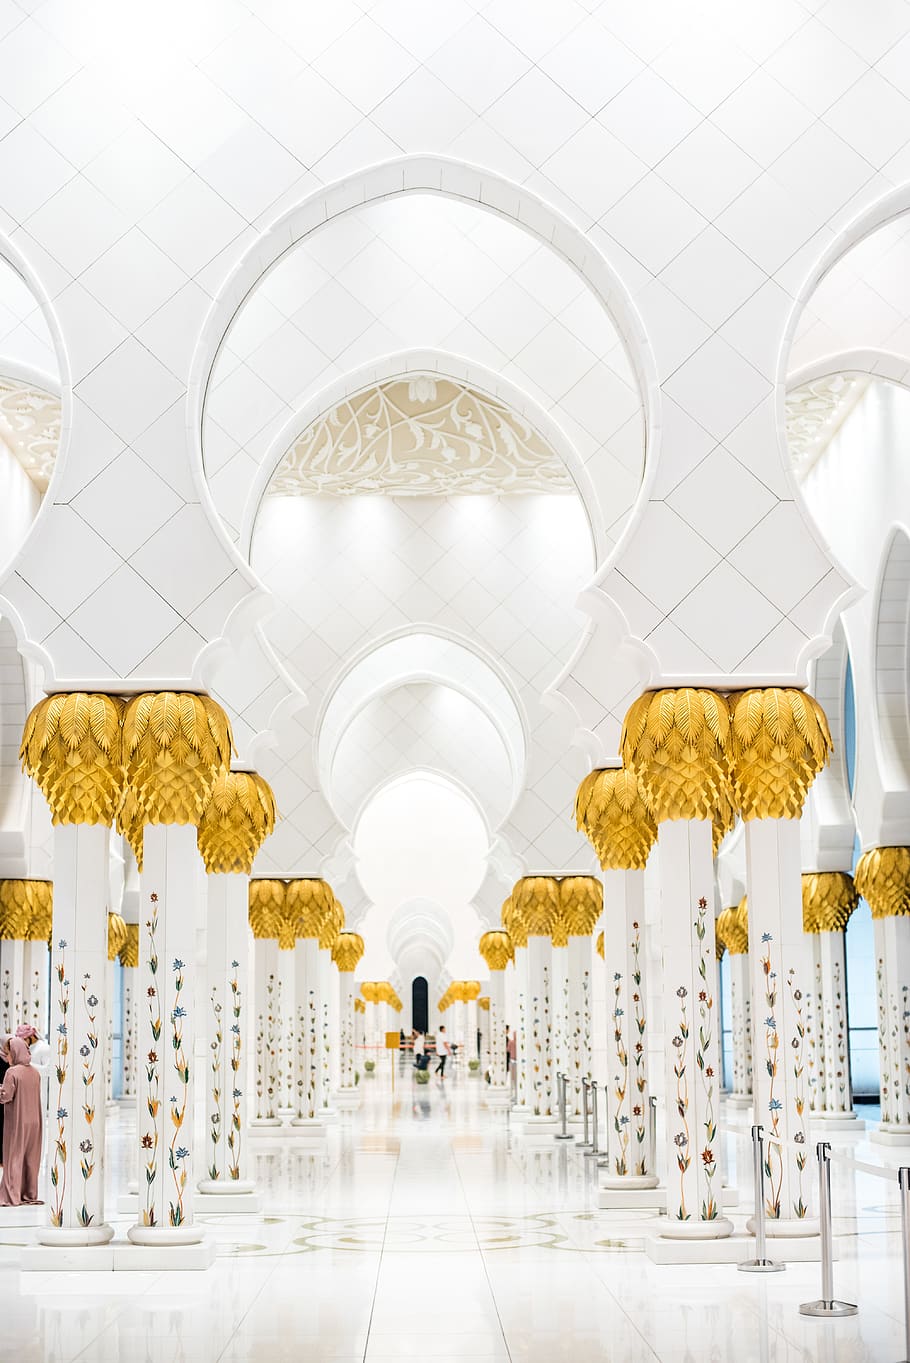 uae, abu dhabi, sheikh zayed, grand, mosque, night, lights, HD wallpaper